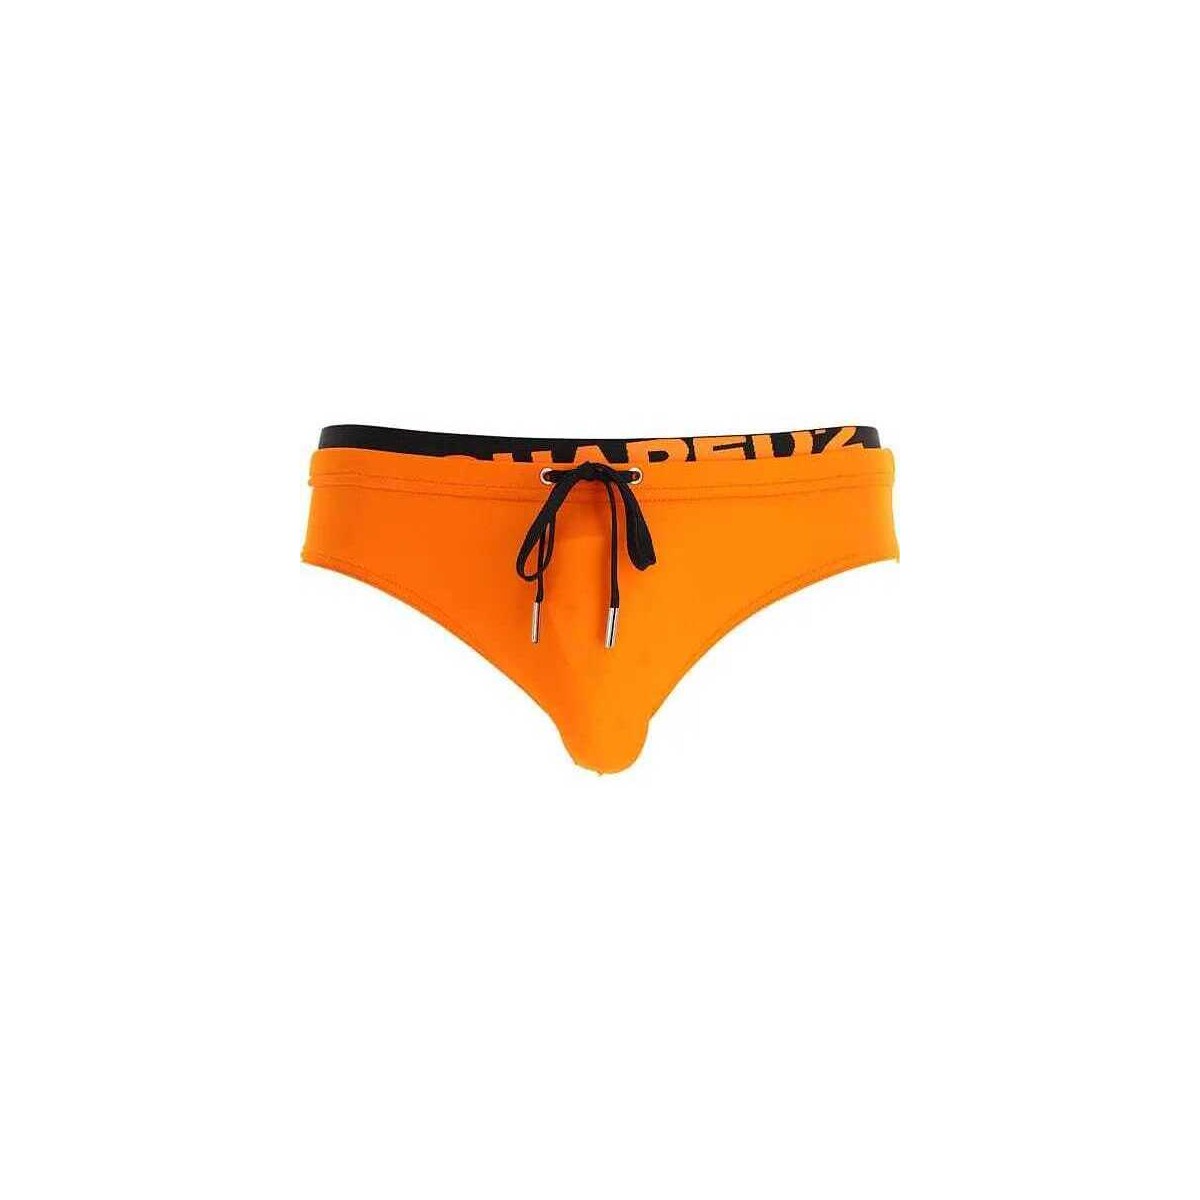 Textiel Heren Zwembroeken/ Zwemshorts Dsquared  Oranje